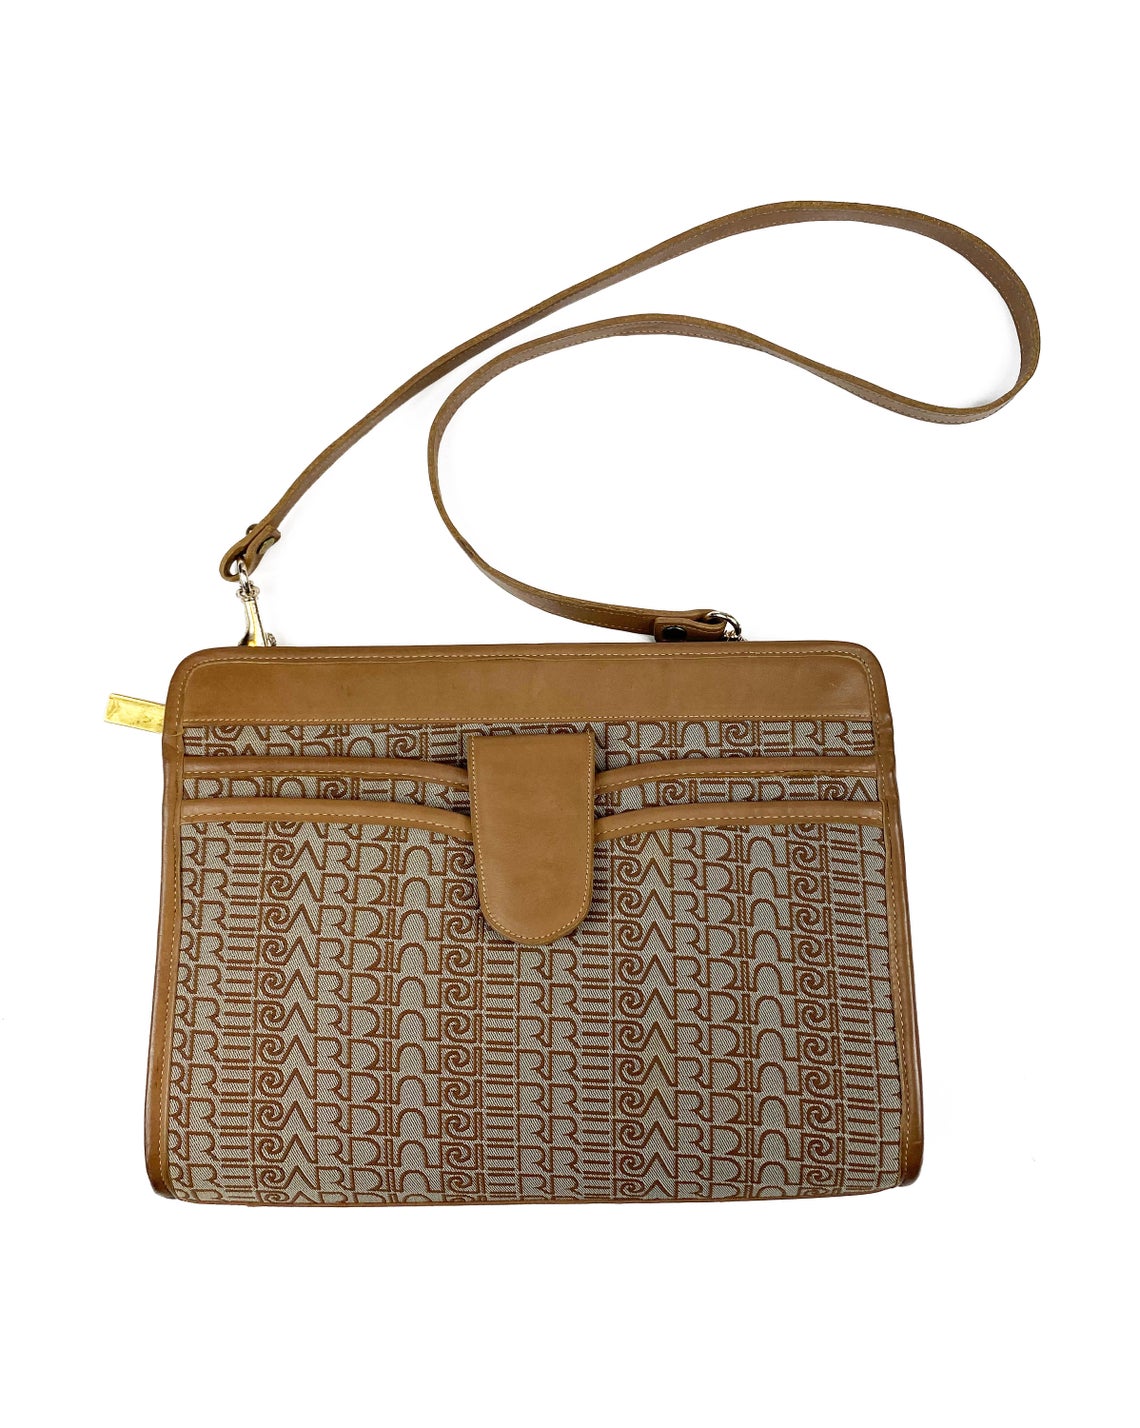 Pierre Cardin Zip Leather Exterior Bags & Handbags for Women for sale | eBay